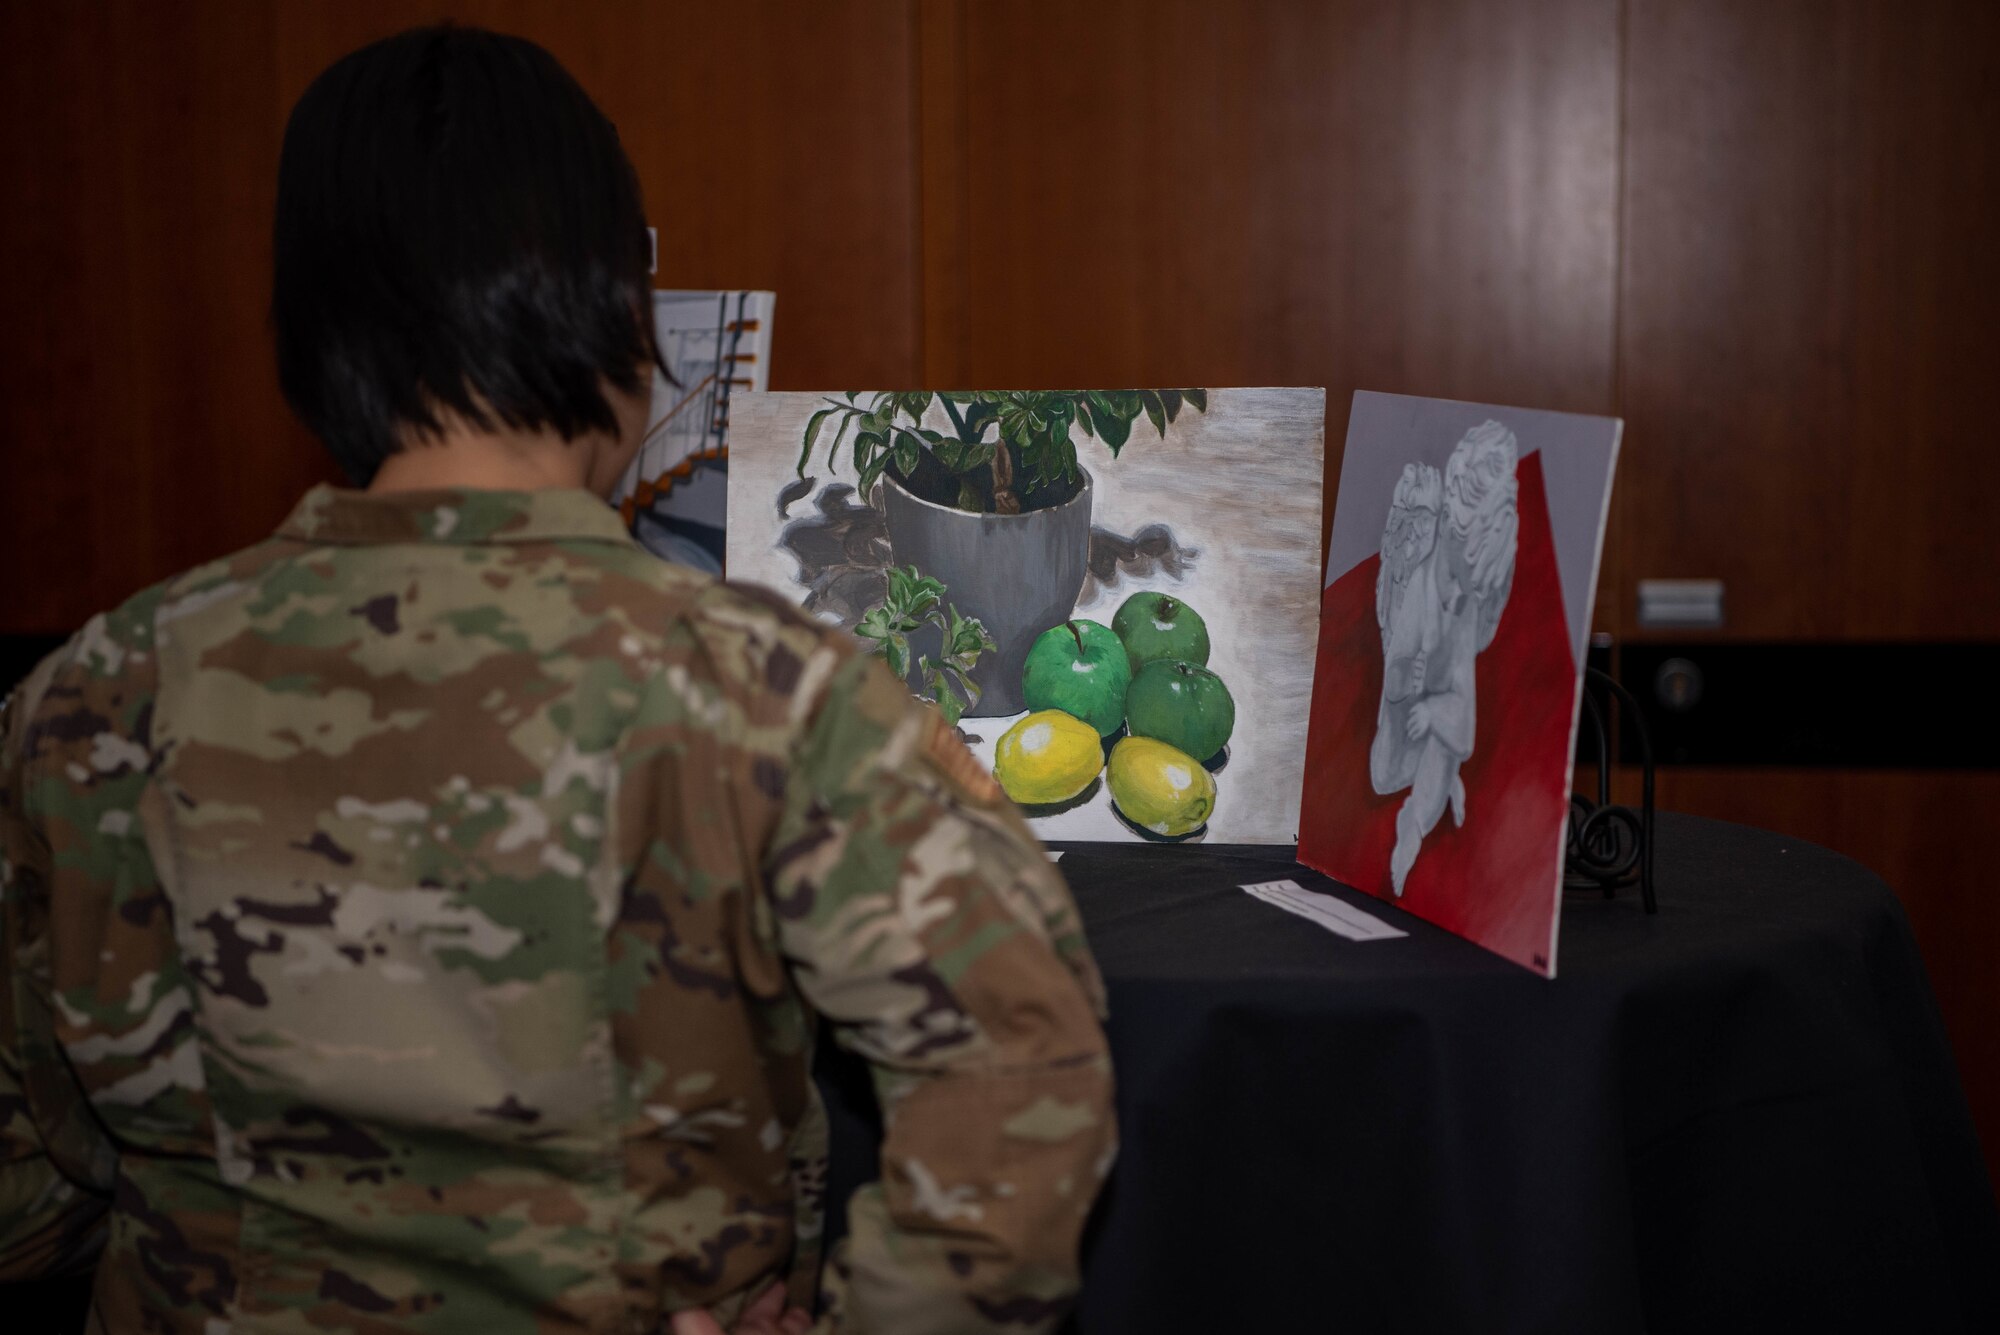 A service member views artwork on display.